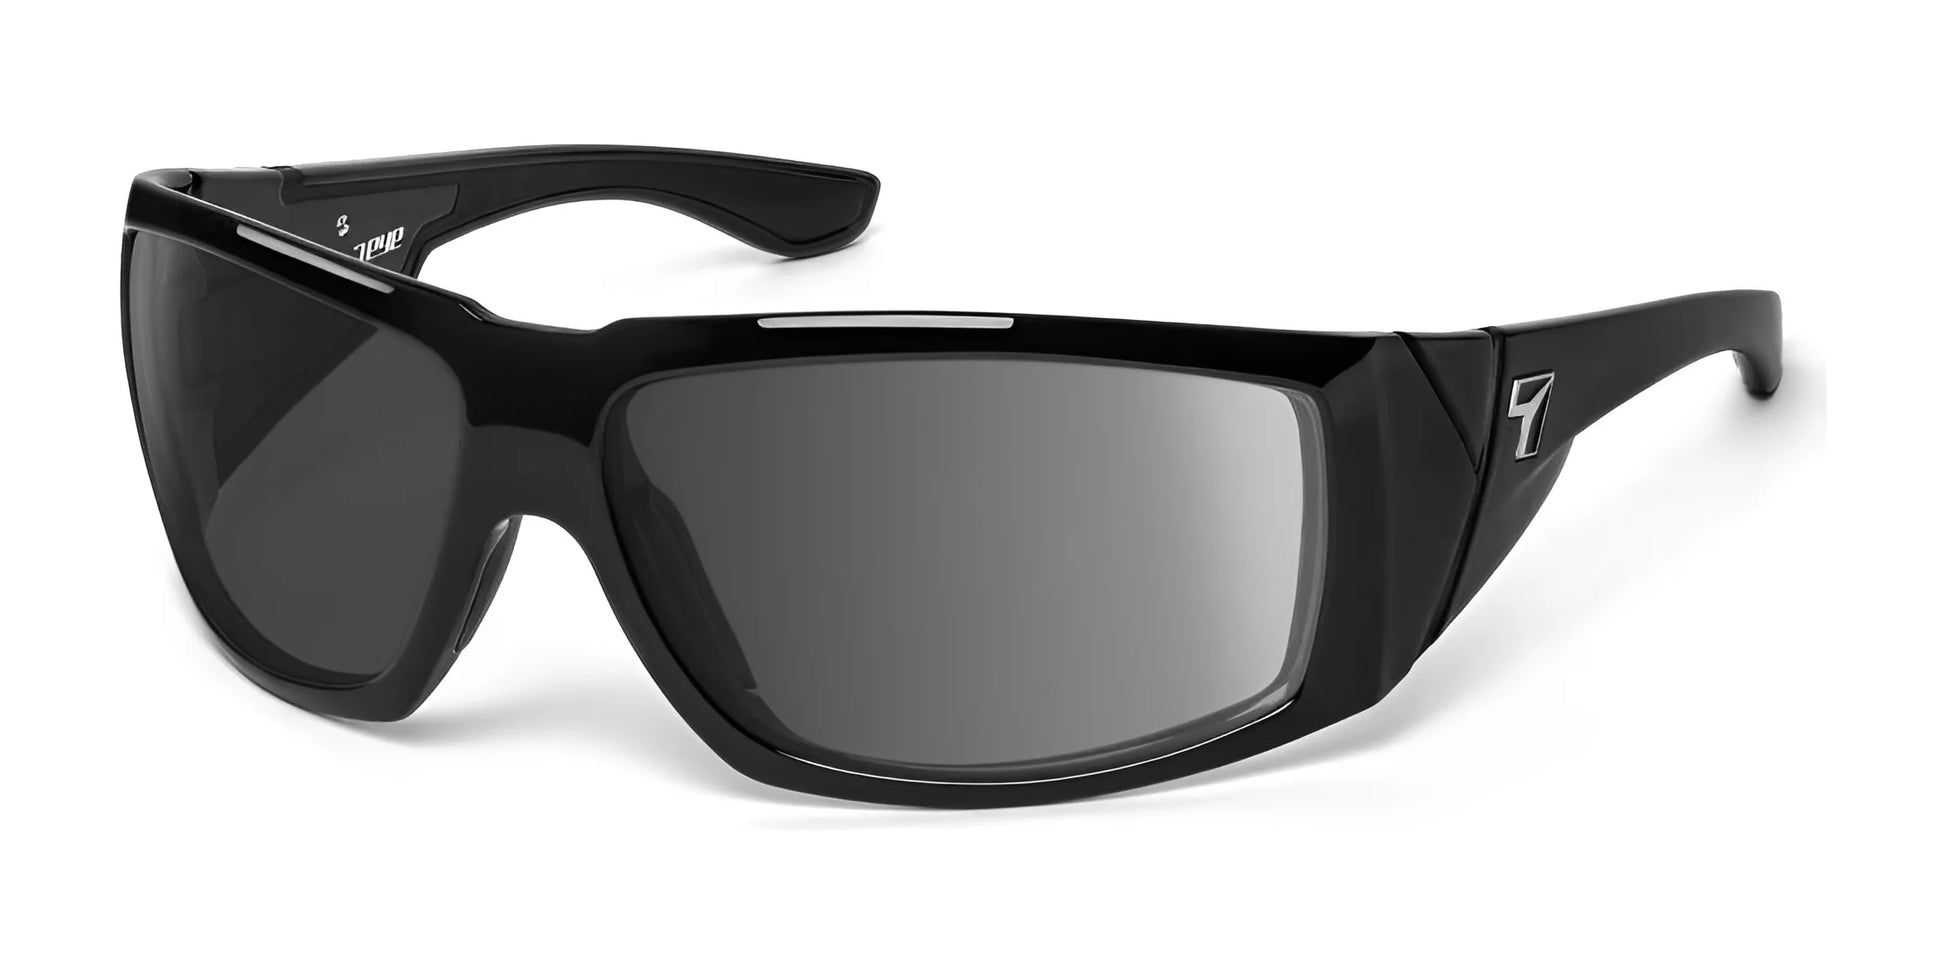 7eye Jordan Sunglasses Glossy Black / Gray